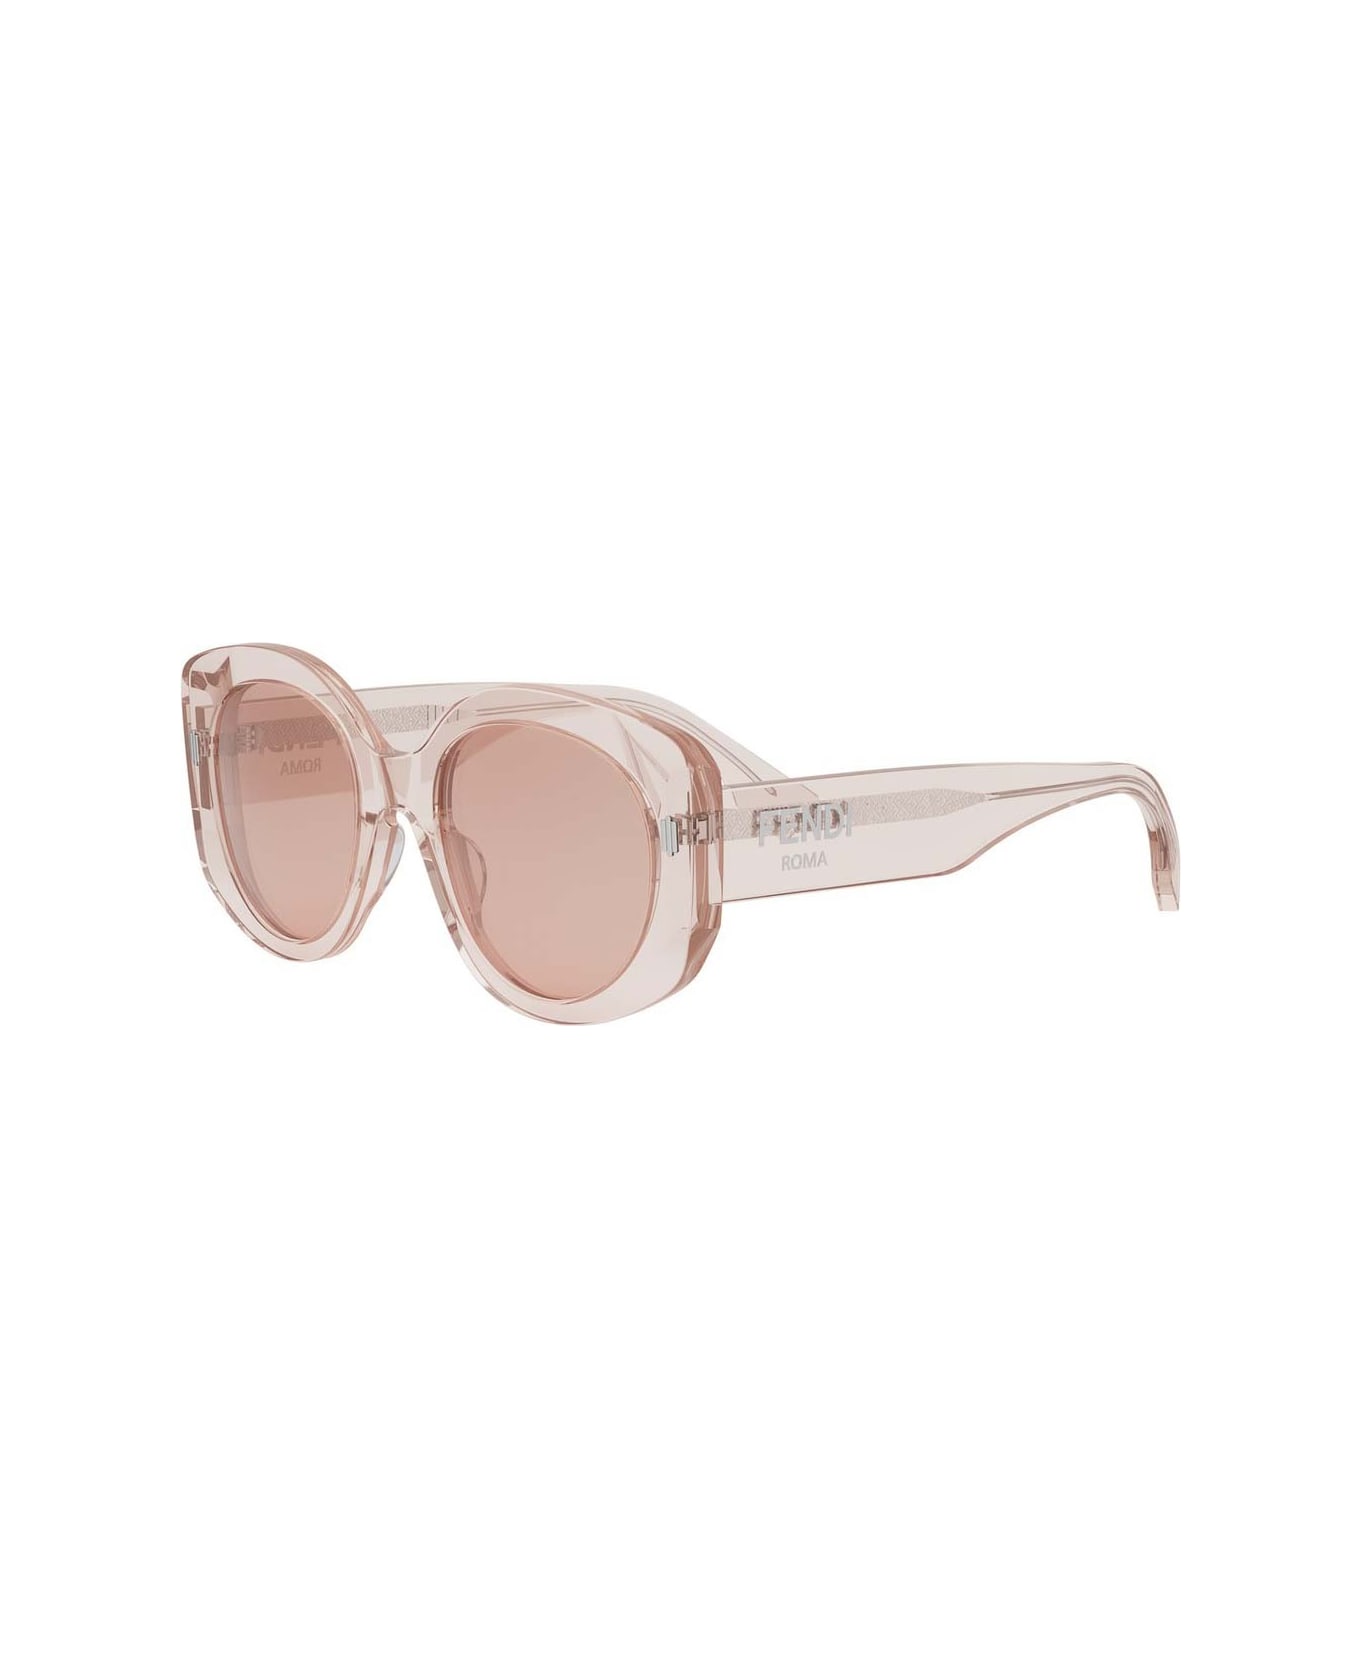 Fendi Eyewear Sunglasses - Rosa trasparente/Rosa